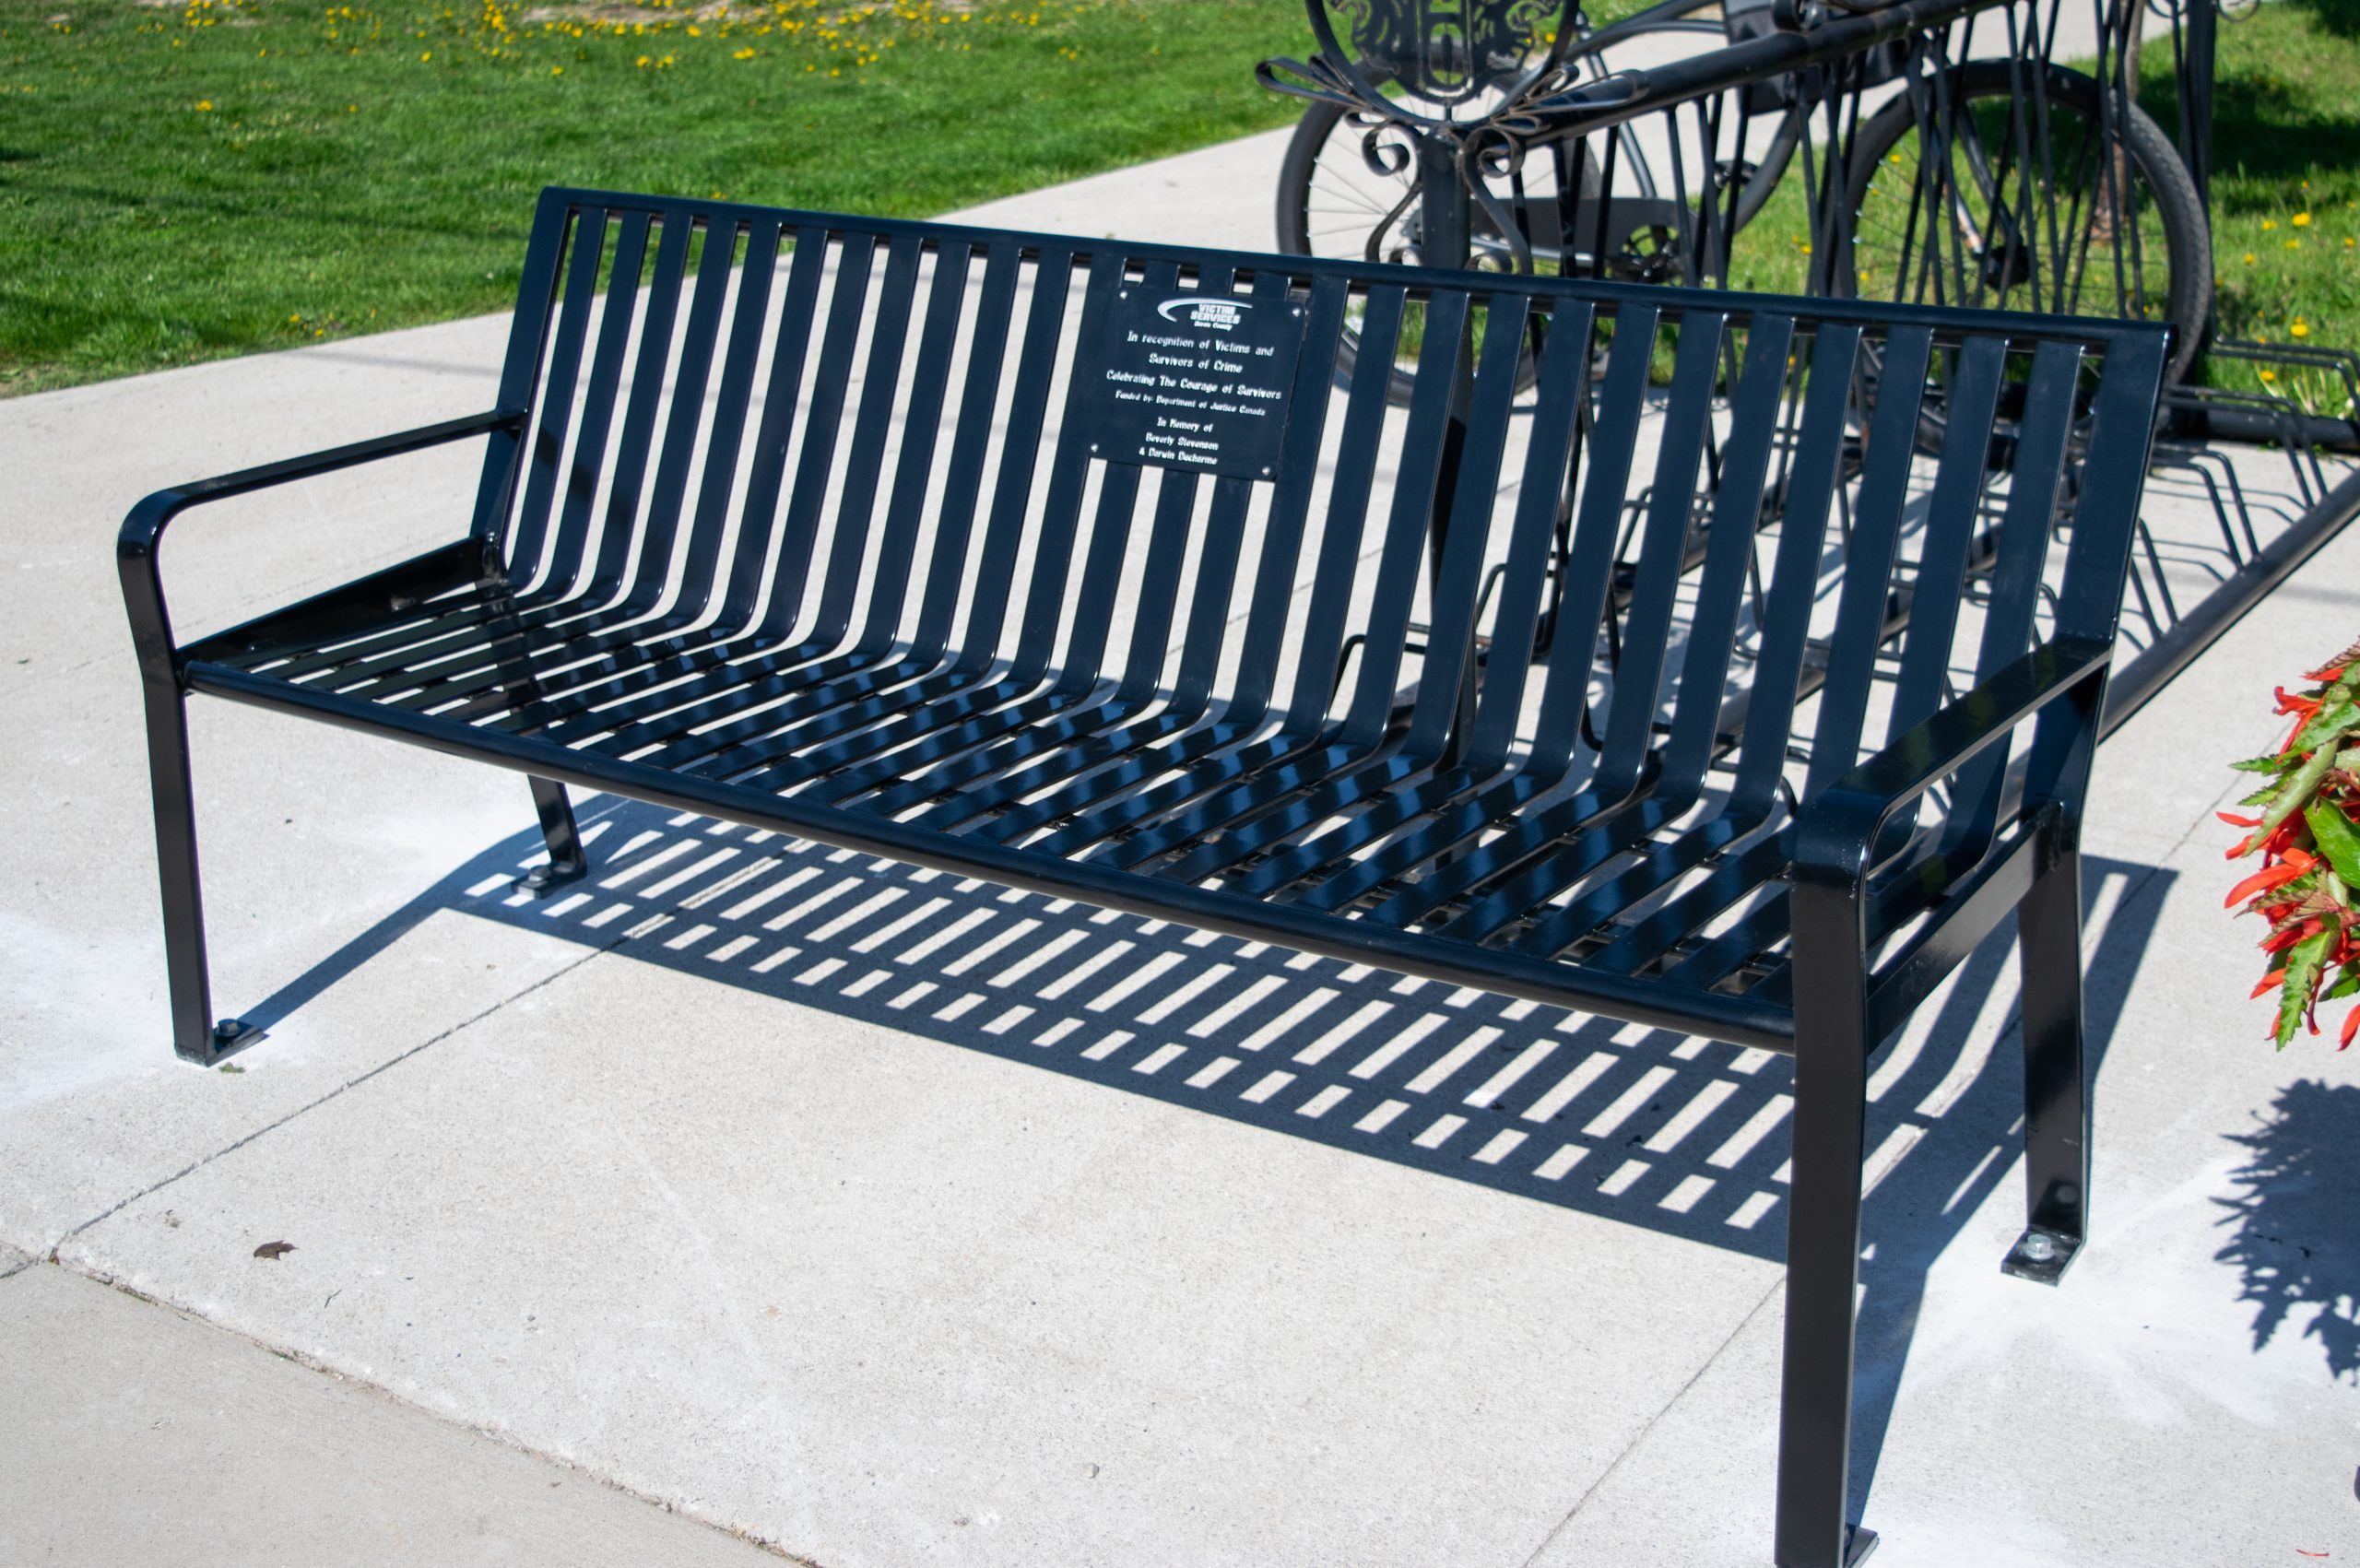 Victim Services Huron unveils benches honouring homicide victims